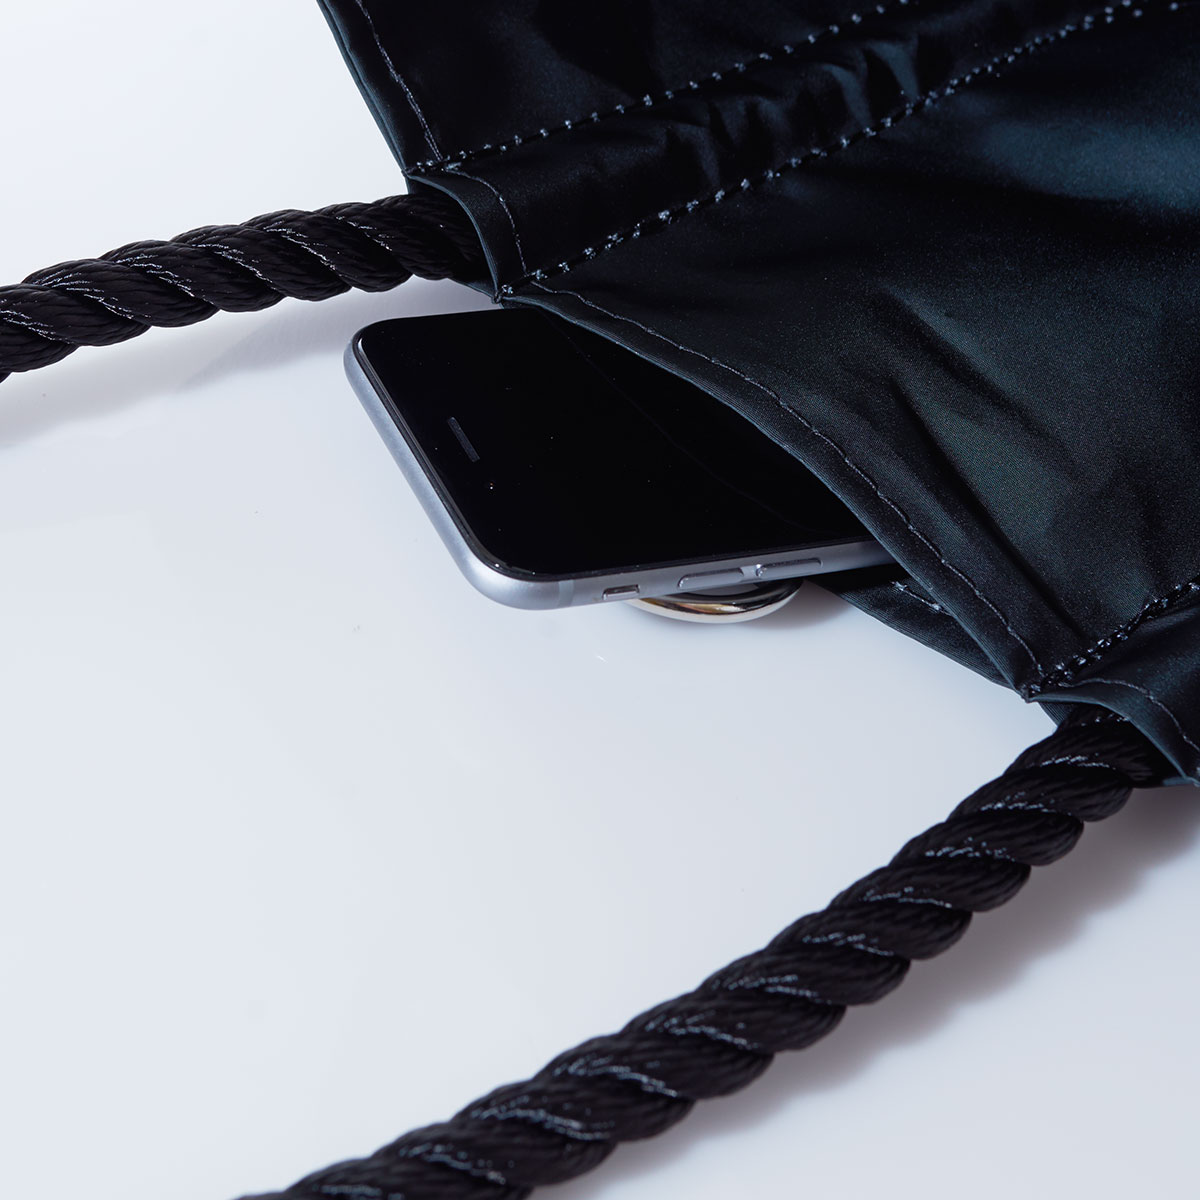 Black-on-Black Anchor Handbag